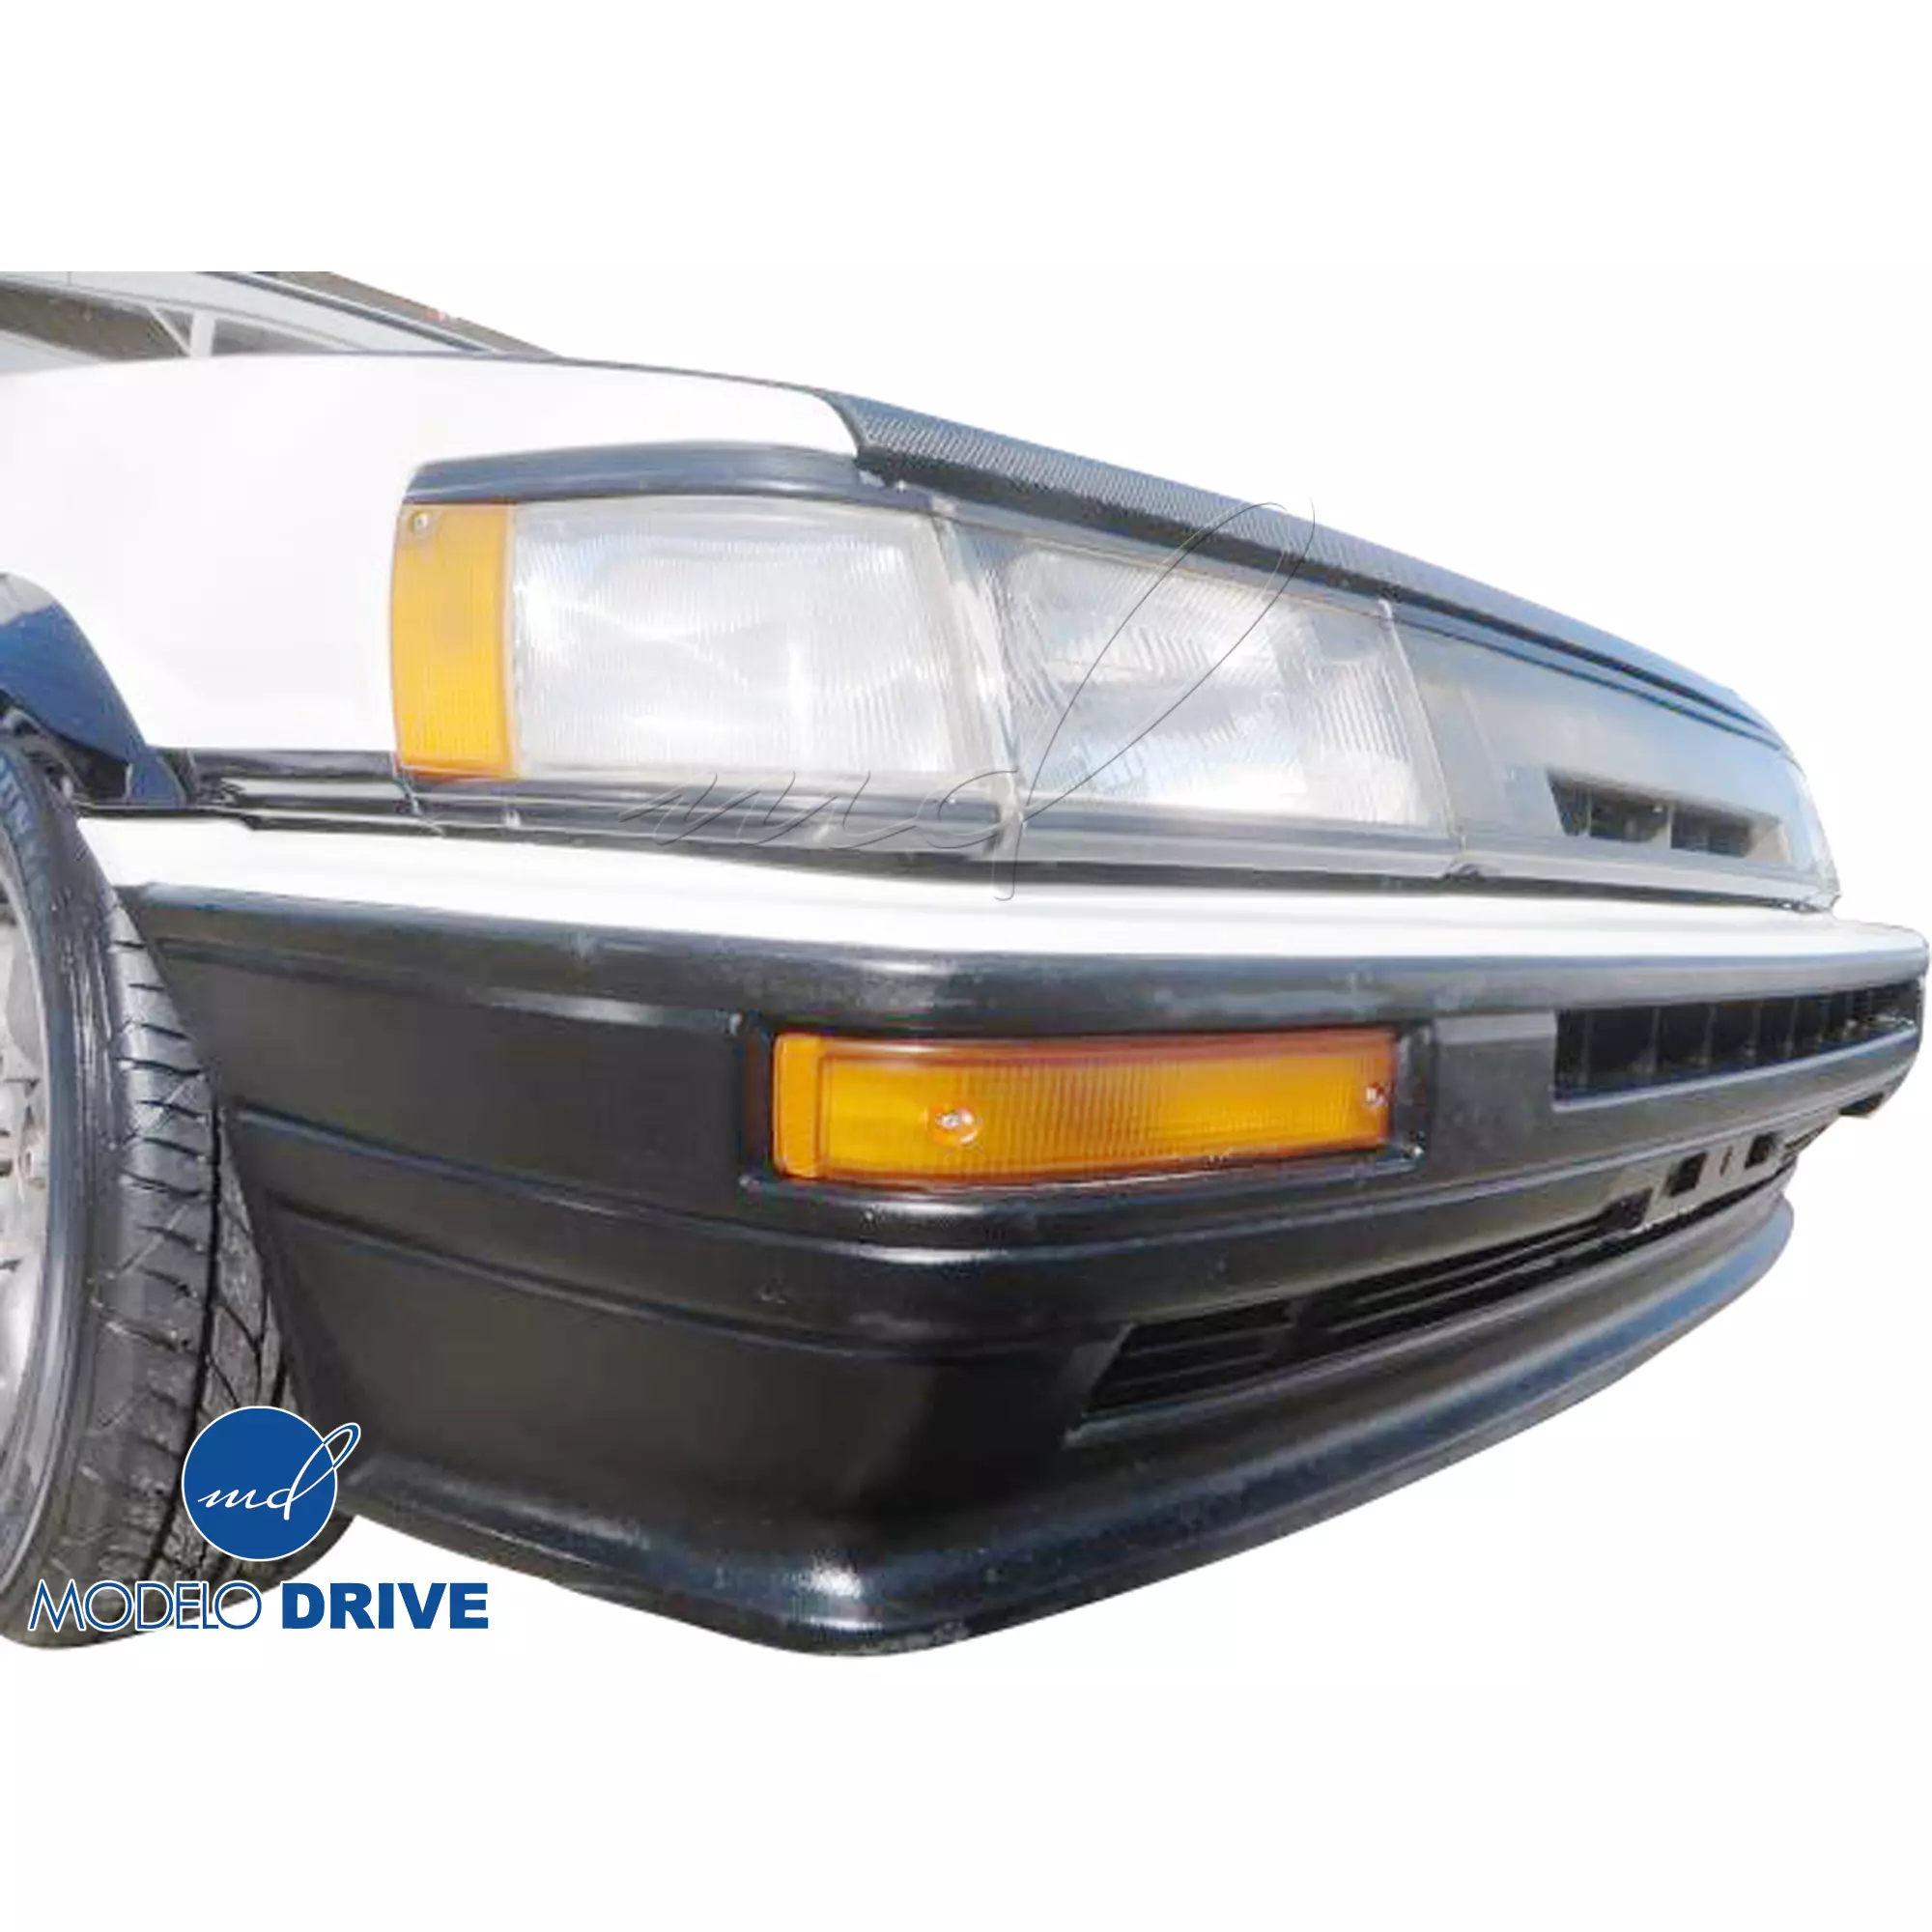 ModeloDrive Carbon Fiber OER Hood > Toyota Corolla AE86 Levin 1984-1987 - Image 10